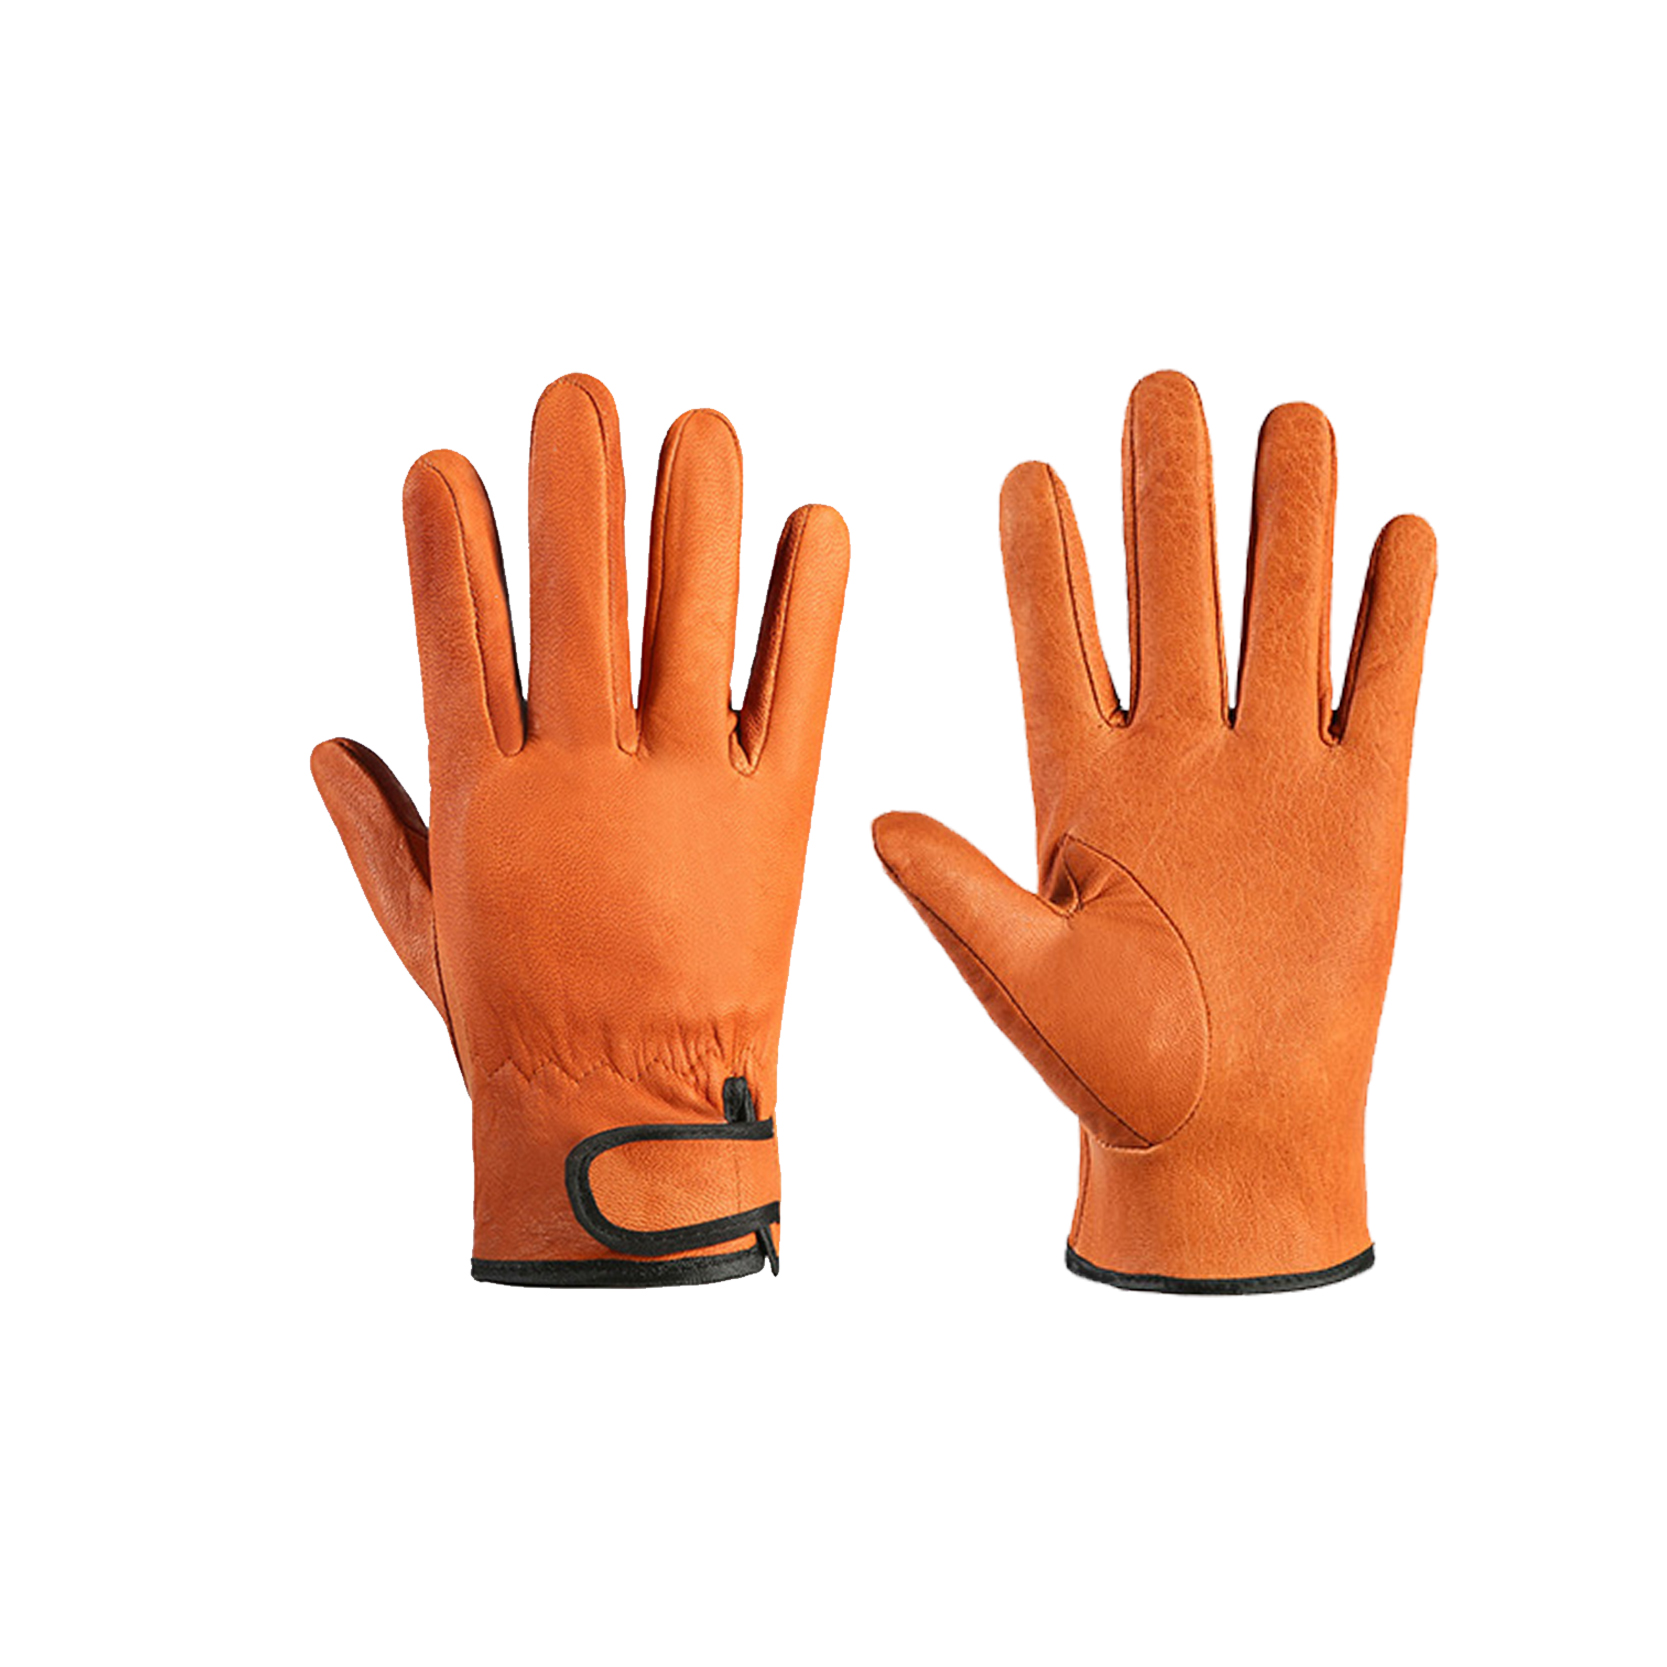 Man Women Gardening Outdoor Working Drivers Work Leather Gloves Heat Resistant Cowhide Welding Gloves